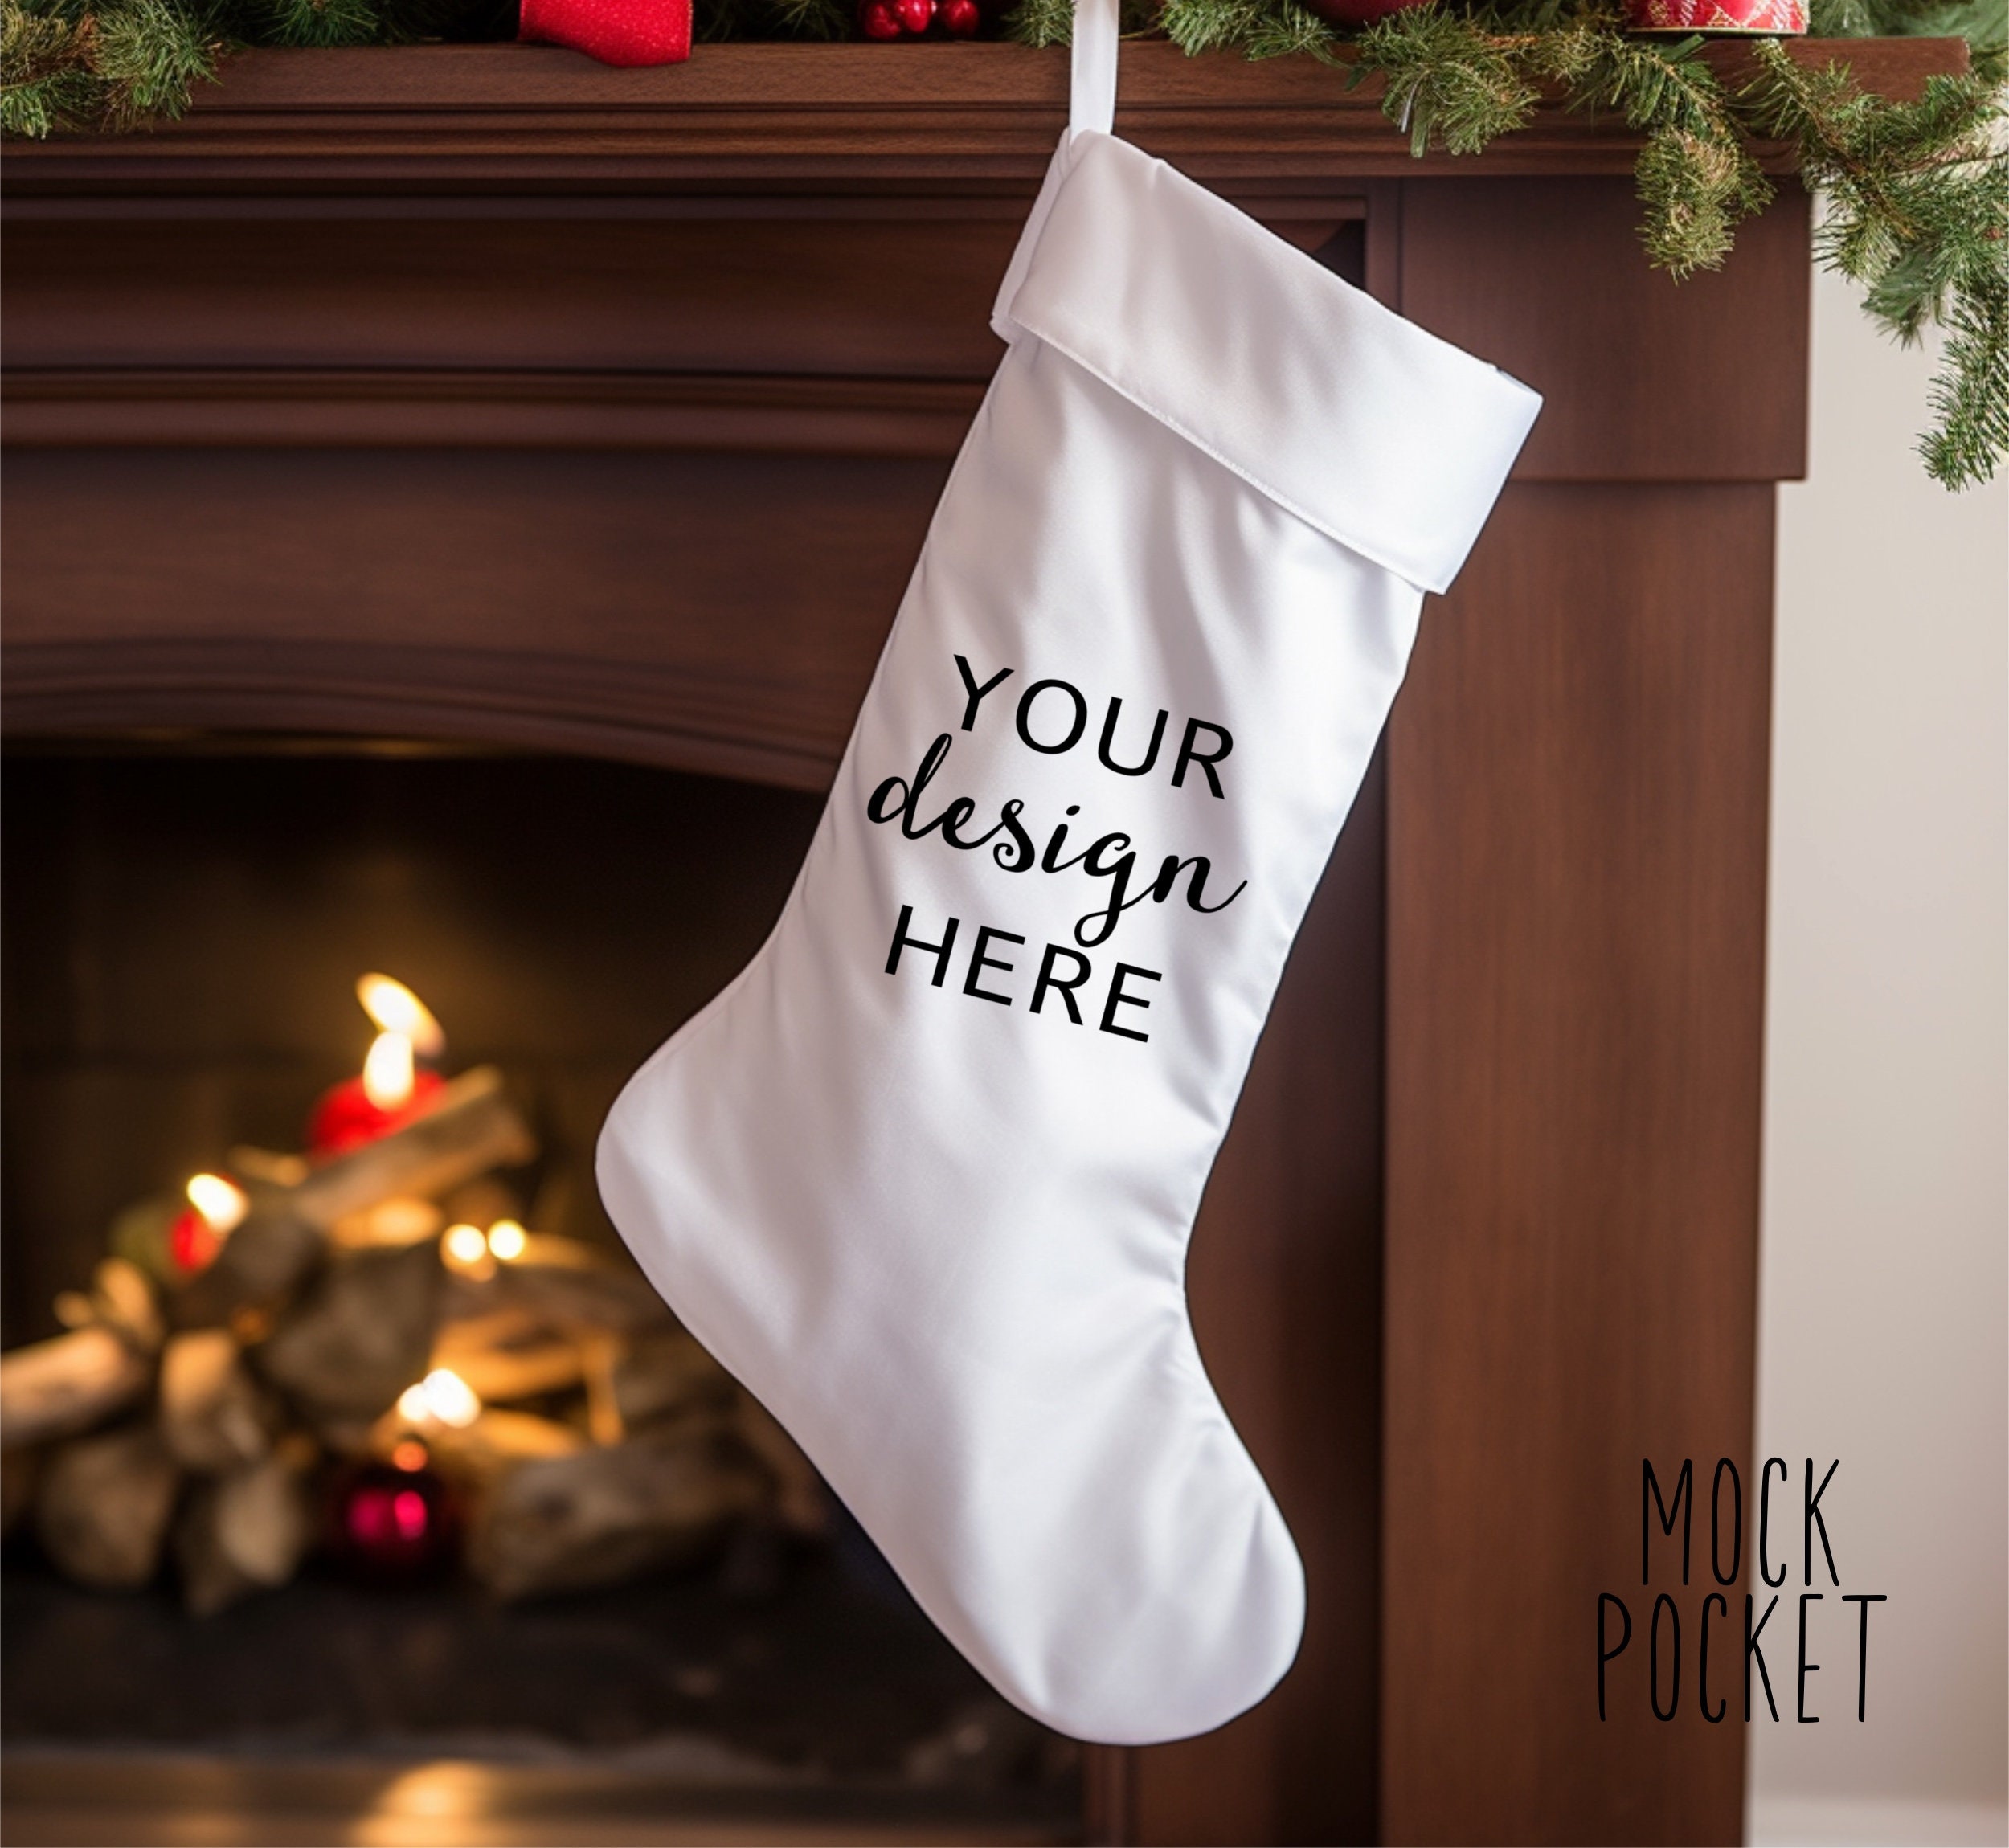 Yyeselk Christmas Stocking with Letter Mini Cute Gift Bag for